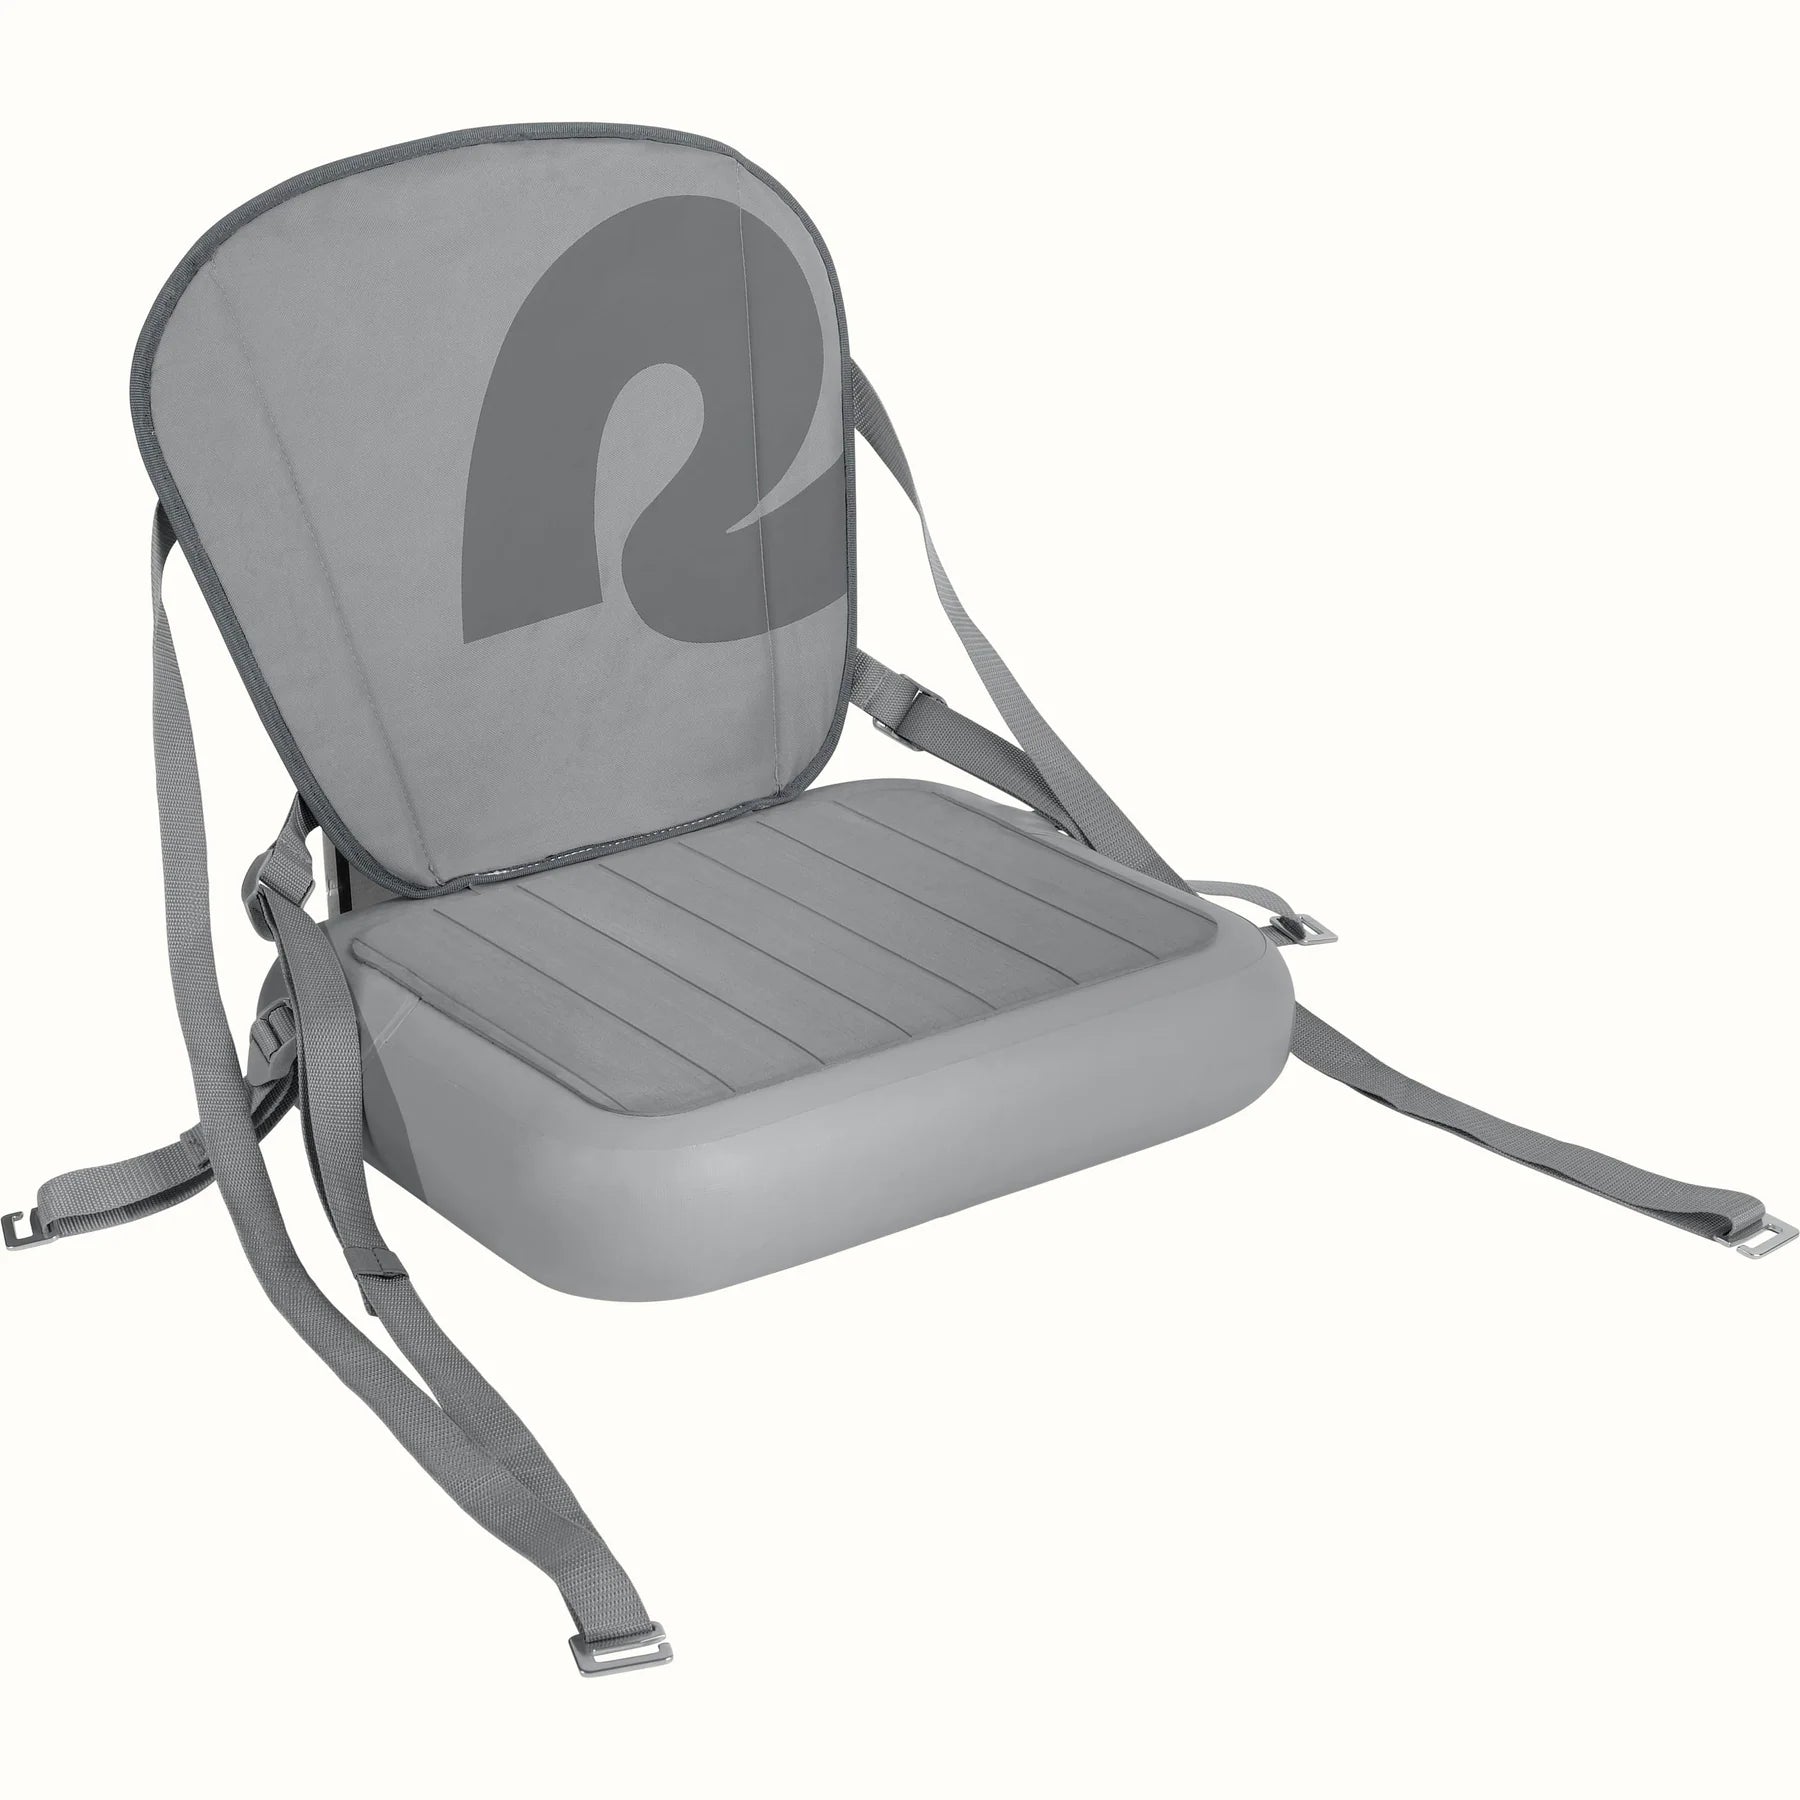 RETROSPEC - AerComfort Inflatable Kayak Seat